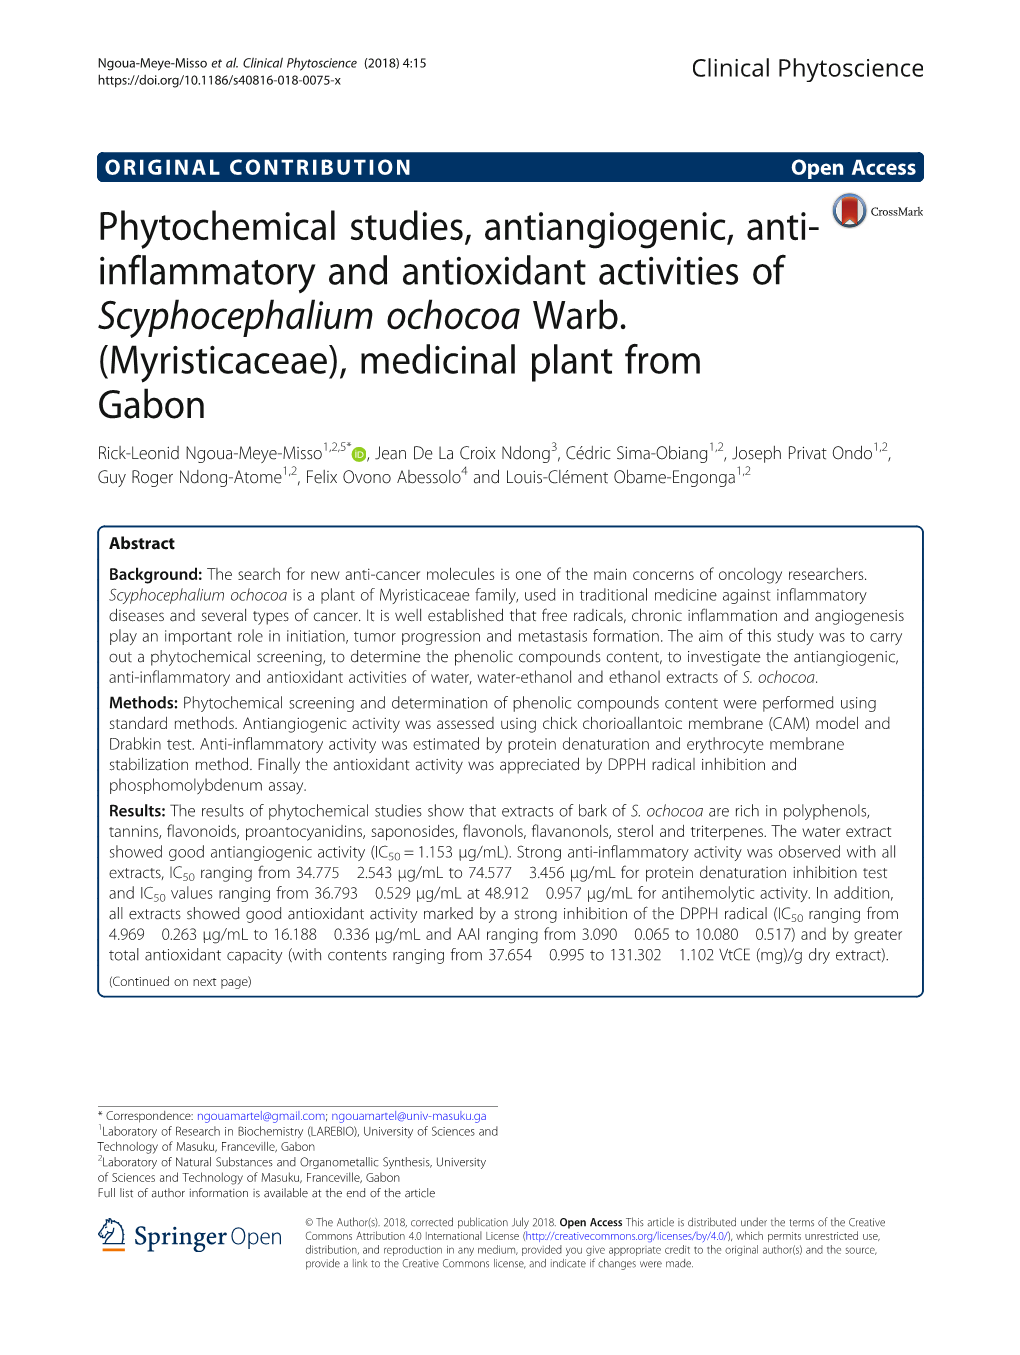 Inflammatory and Antioxidant Activities of Scyphocephalium Ochocoa Warb